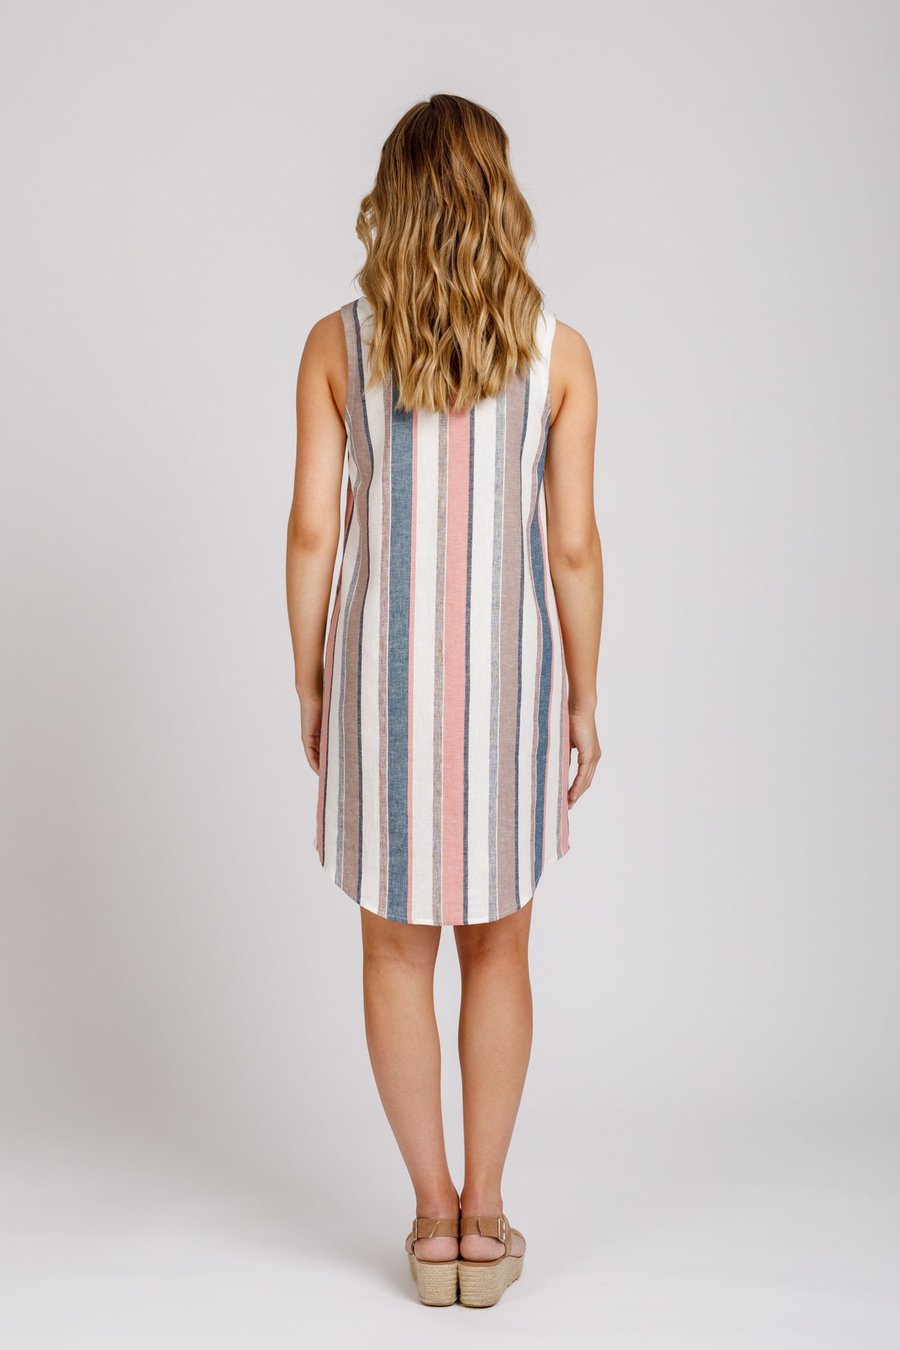 Eucalypt woven tank top& dress pattern- Megan Nielsen